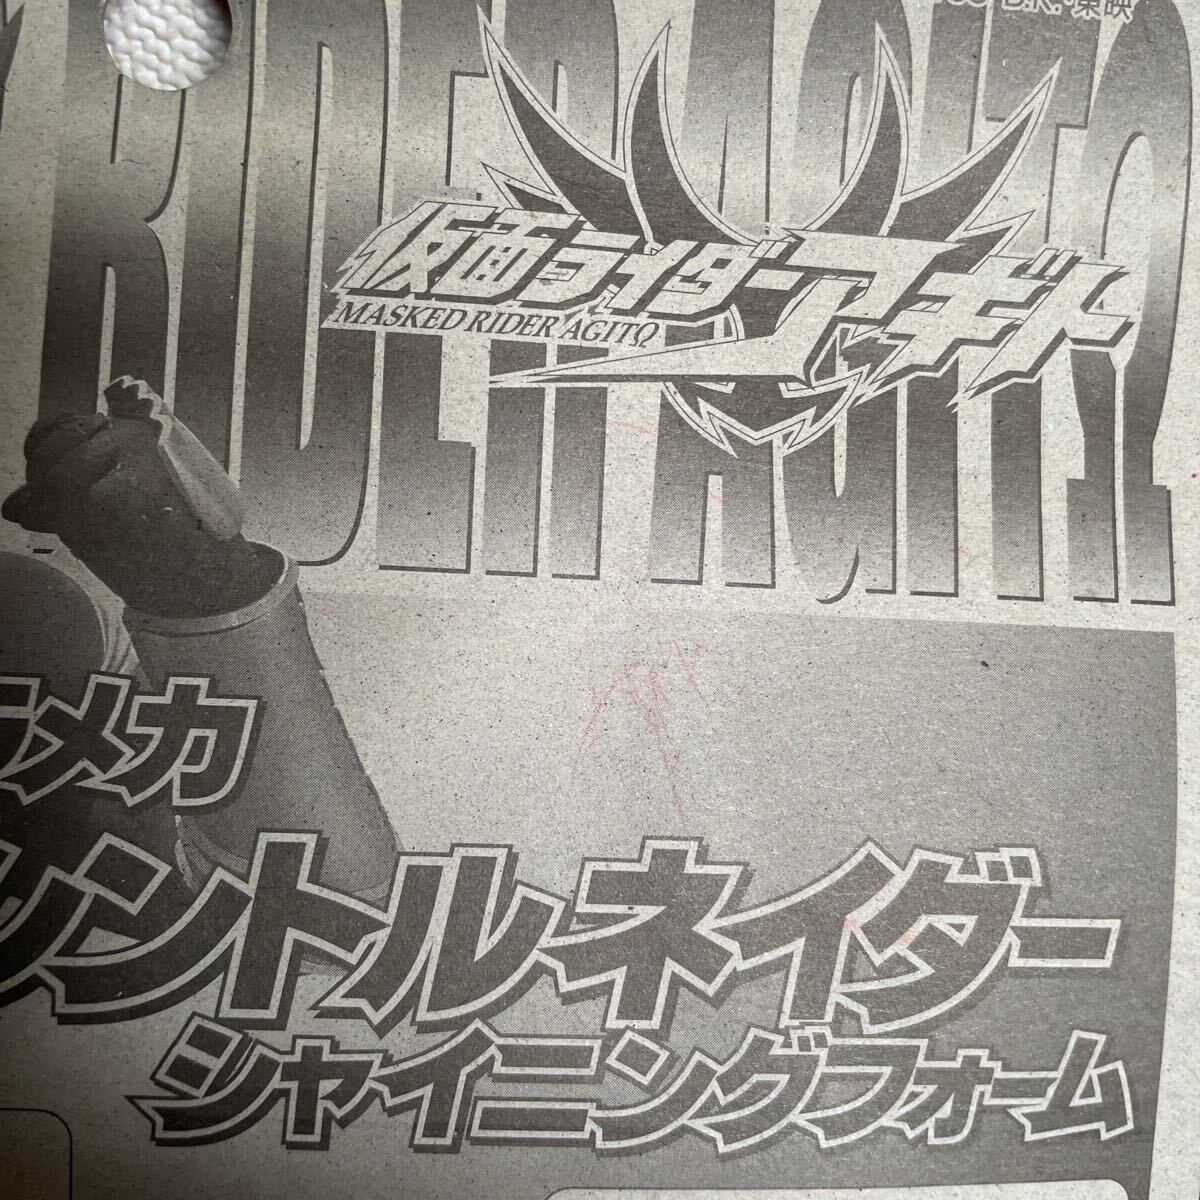  Kamen Rider Agito p lame ka machine to Rene Ida - shining foam figure yutaka